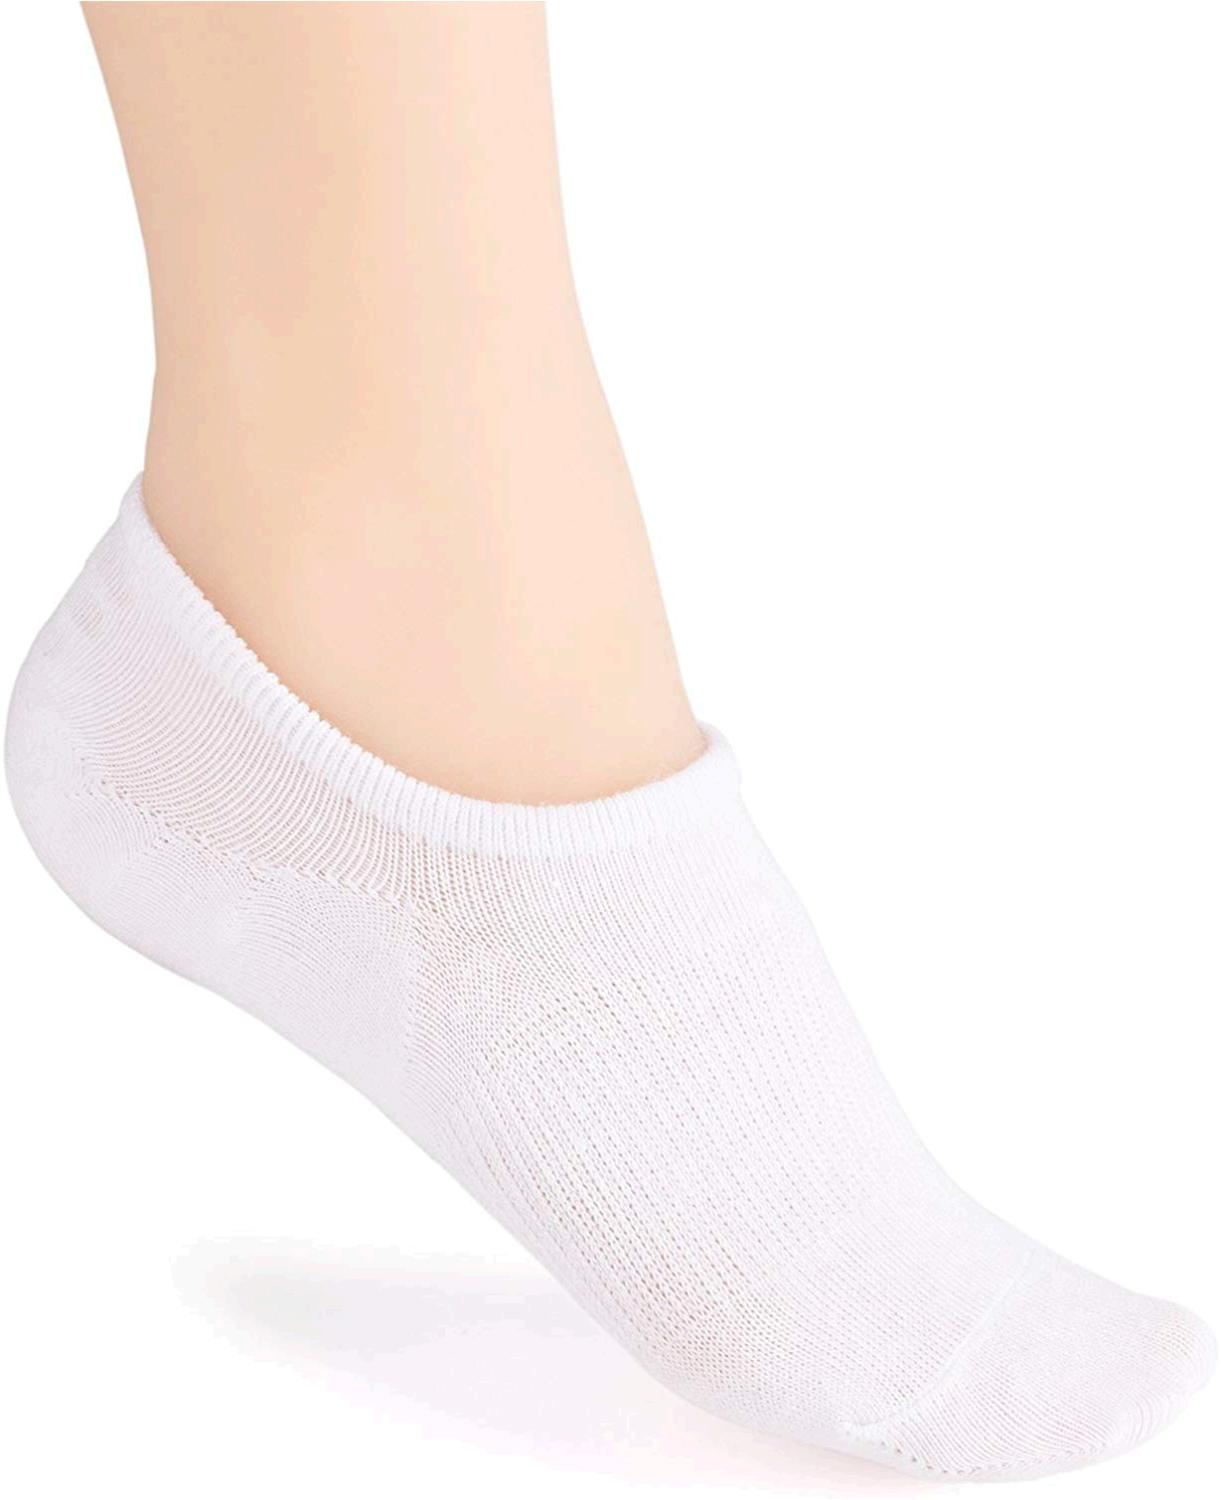 Idegg No Show Socks Women And Men 6 Pairs Low Cut Cotton Casual White Size 6 0 Ebay